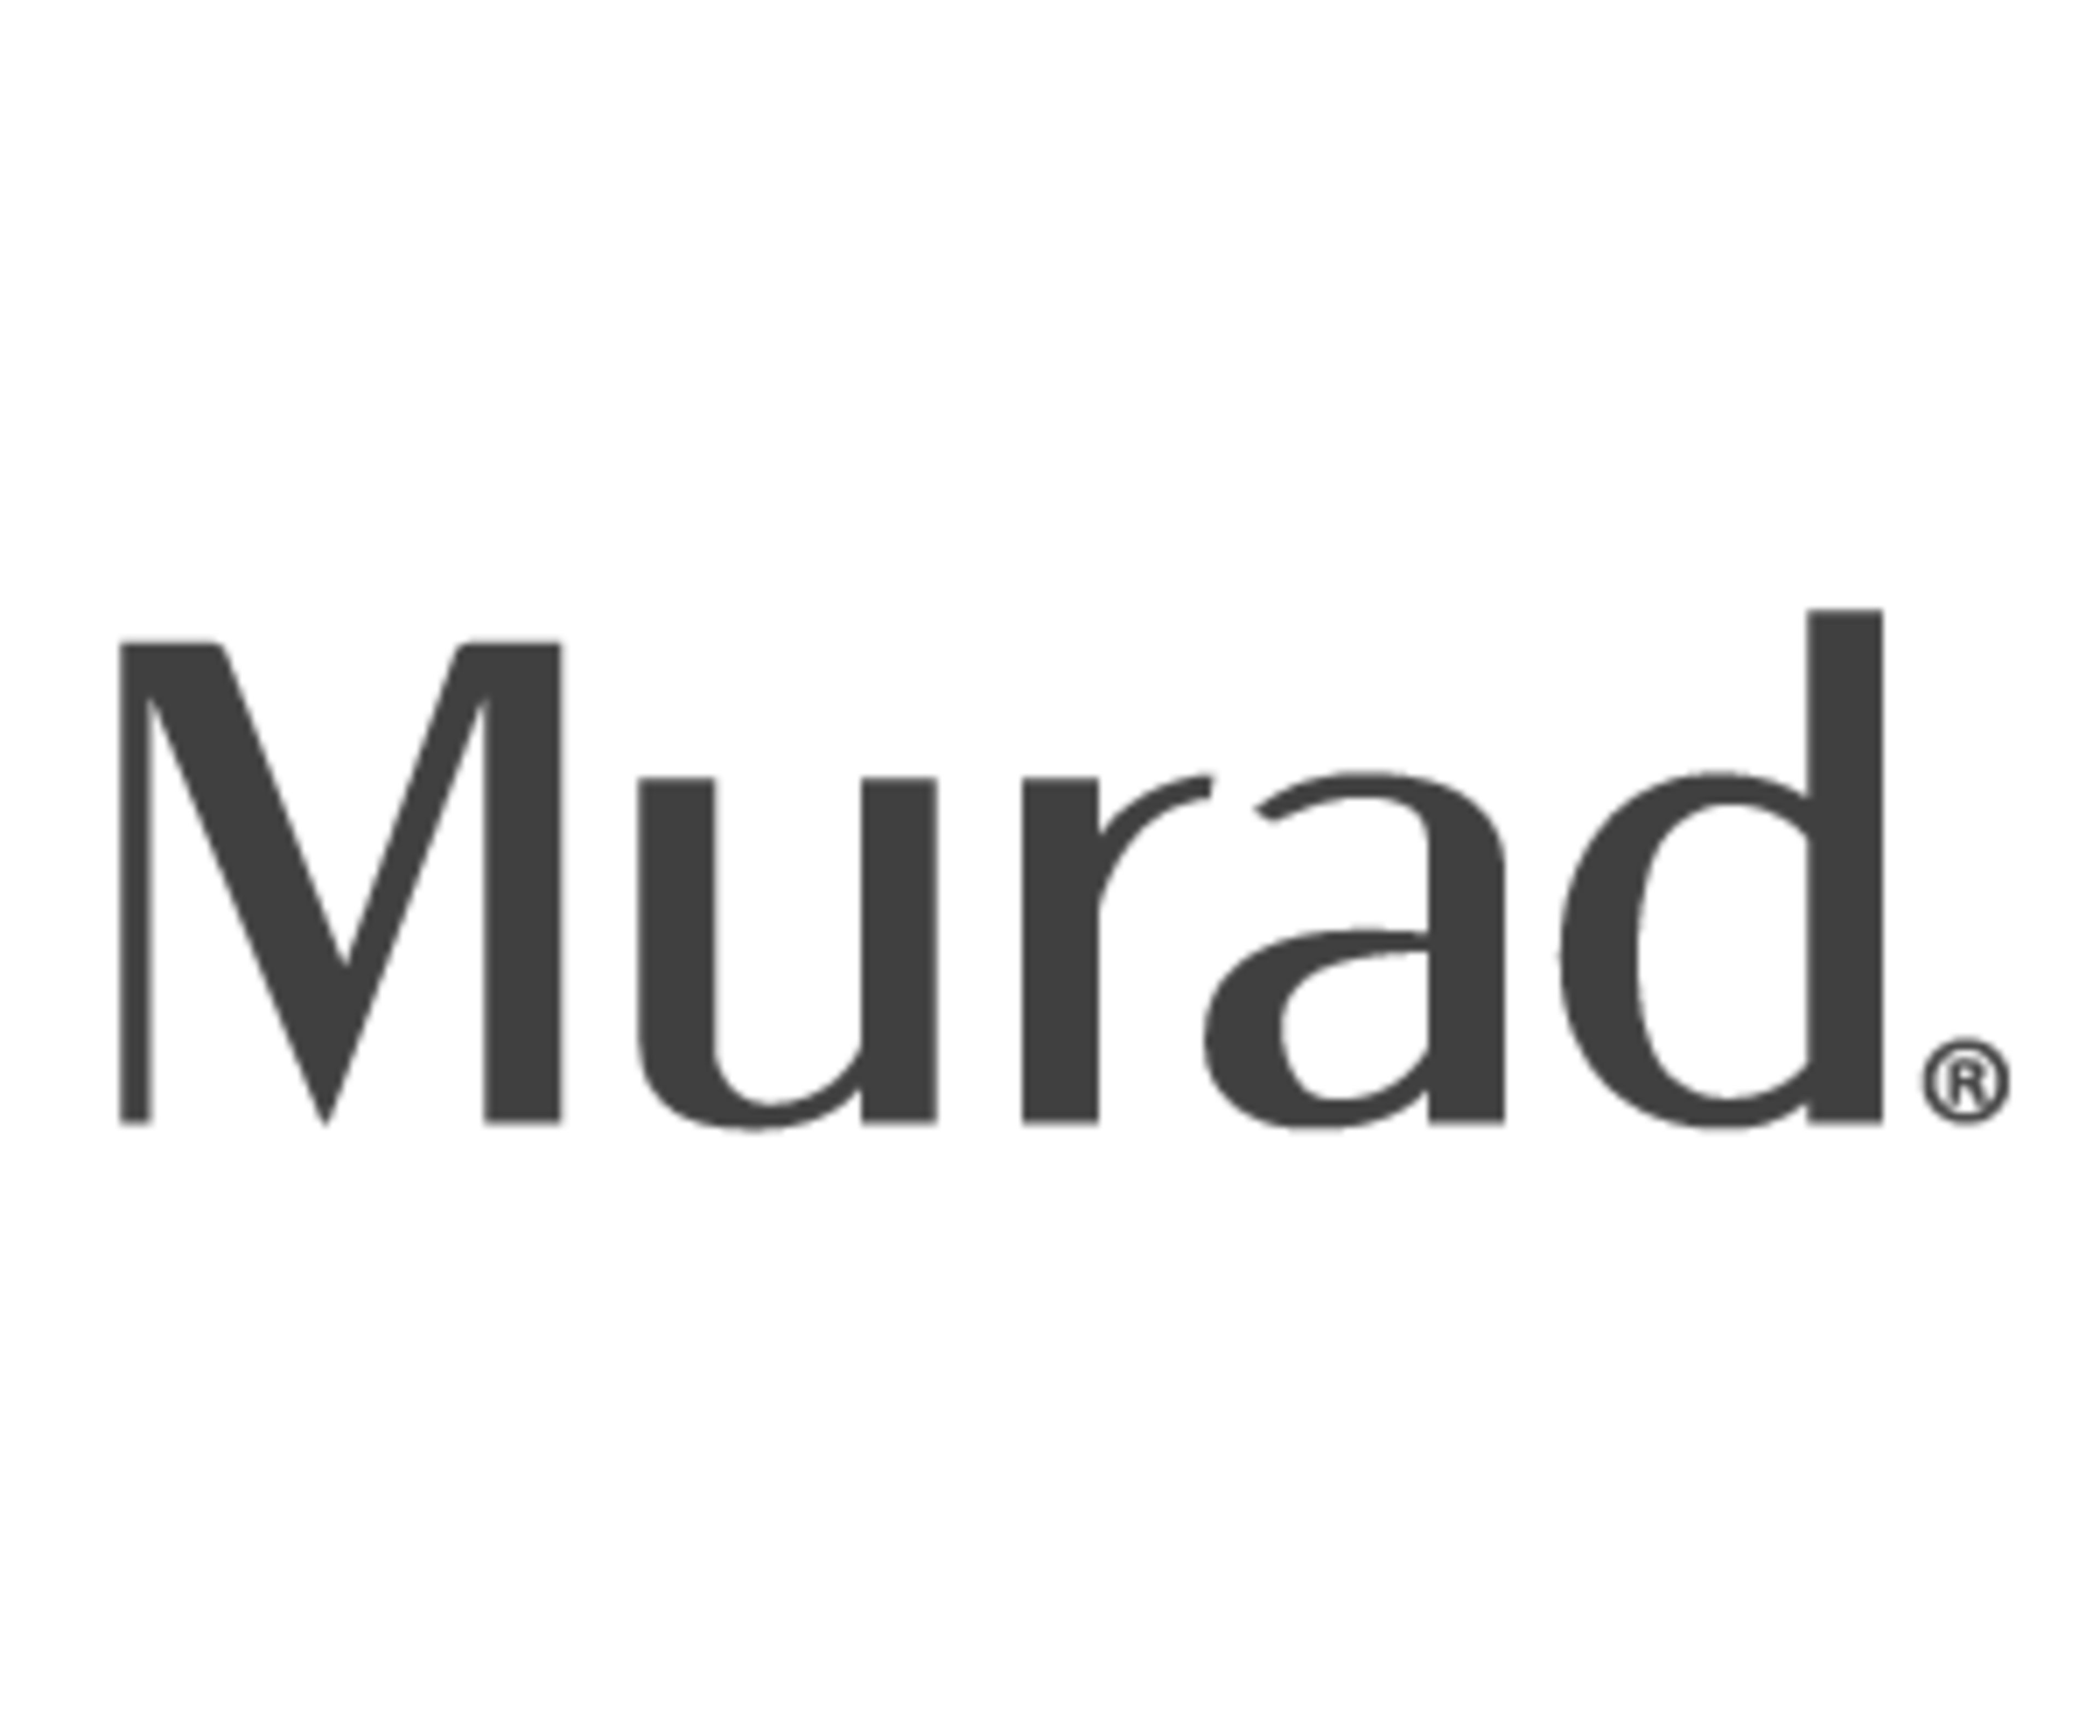 Murad Skin Care CanadaCode